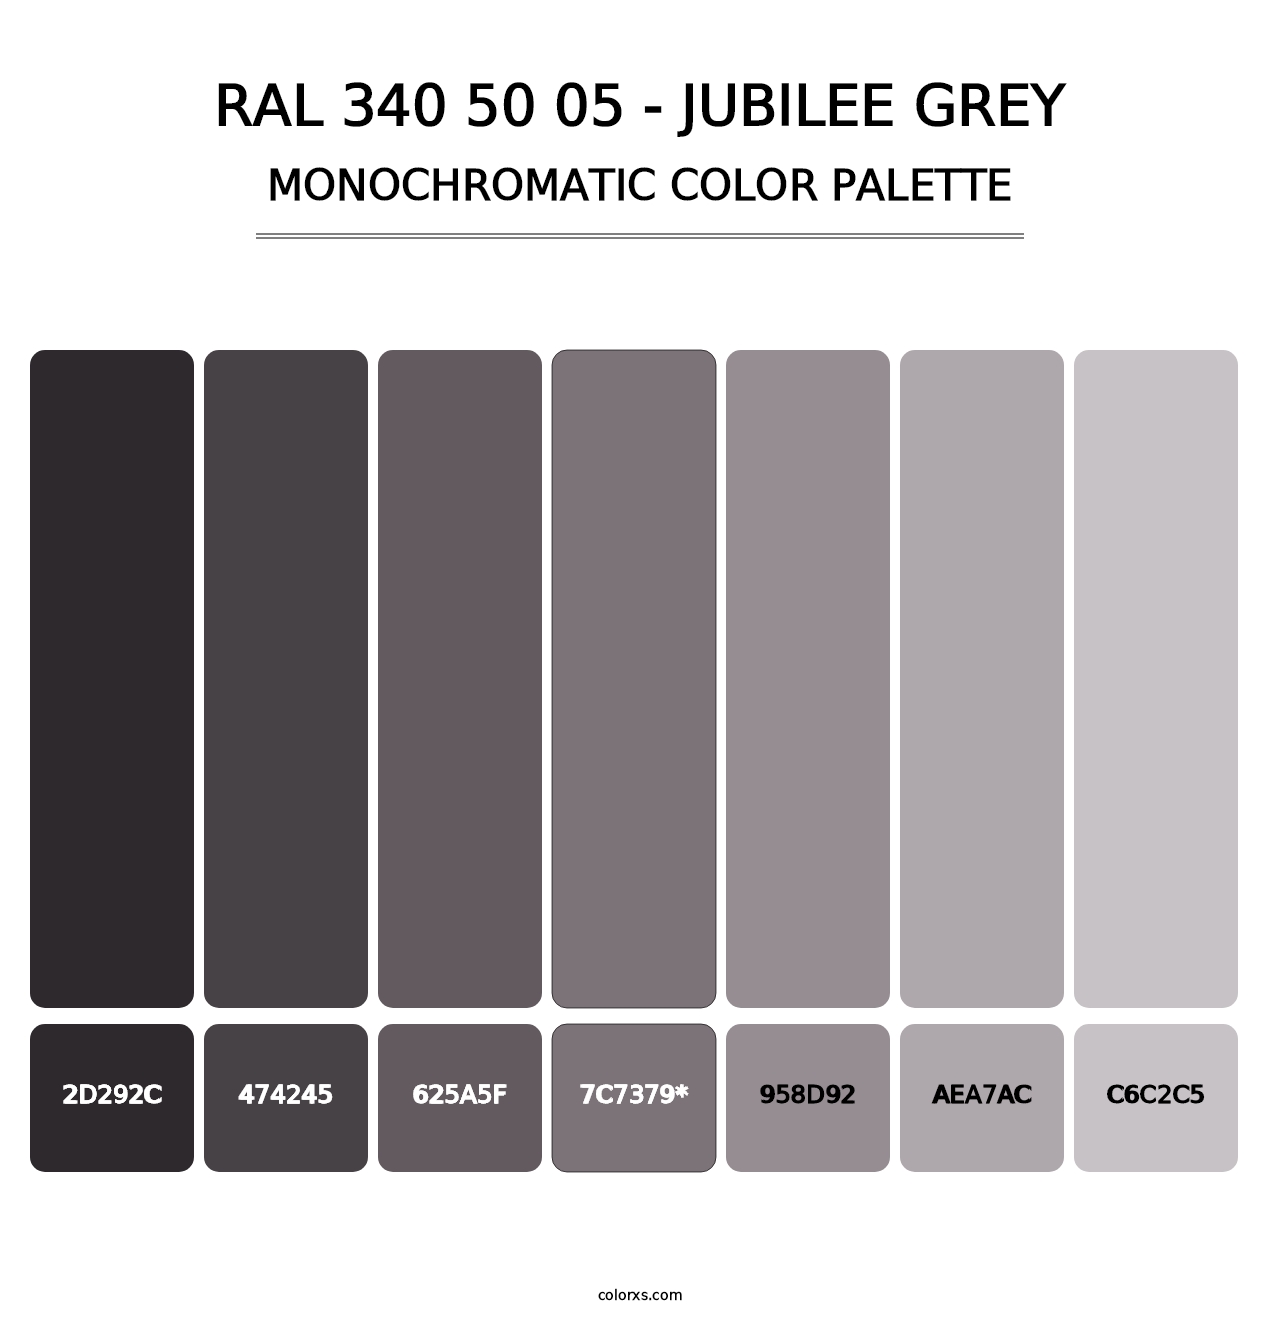 RAL 340 50 05 - Jubilee Grey - Monochromatic Color Palette